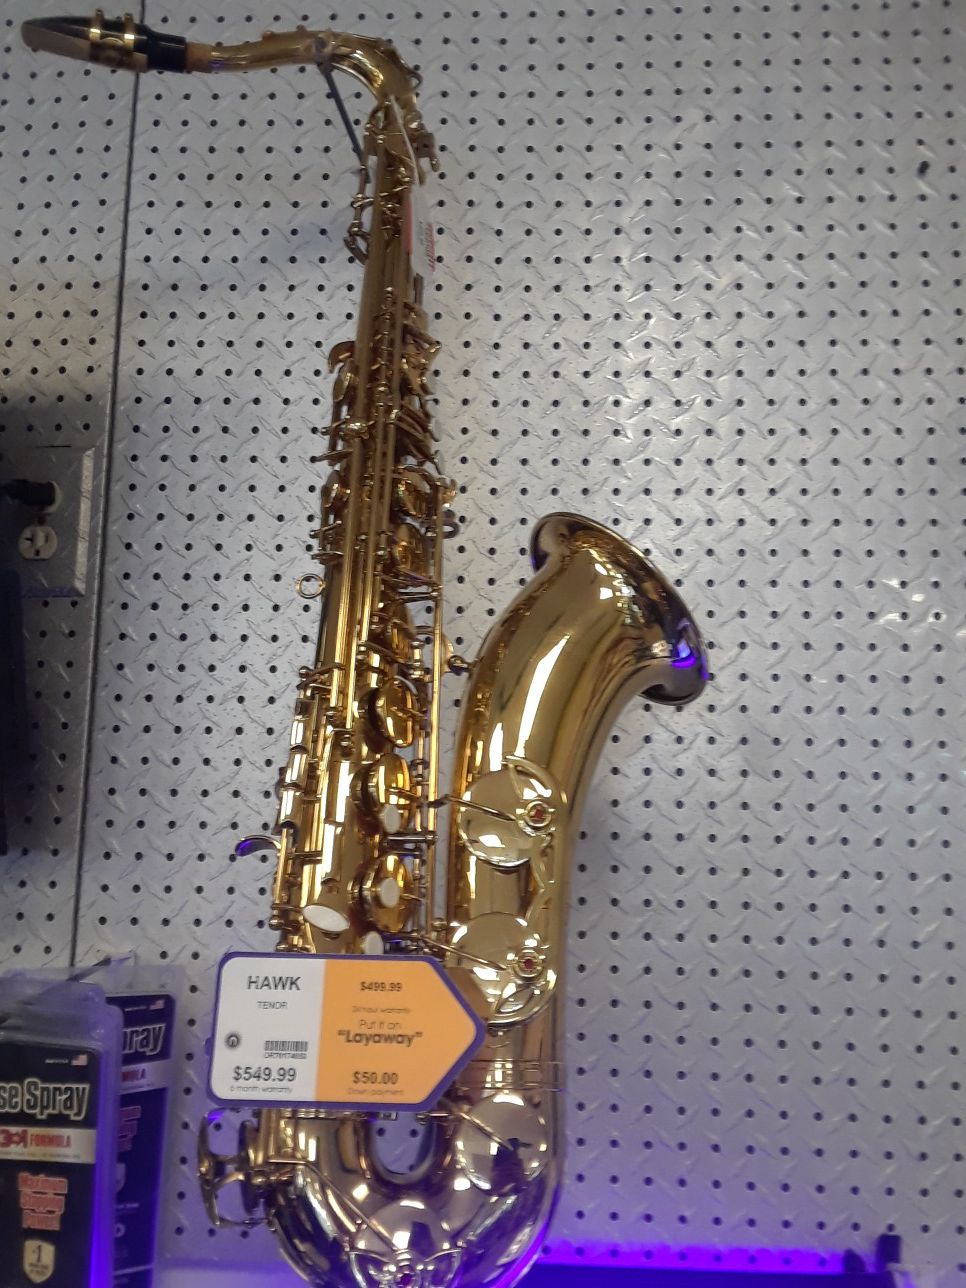 Hawk saxophone